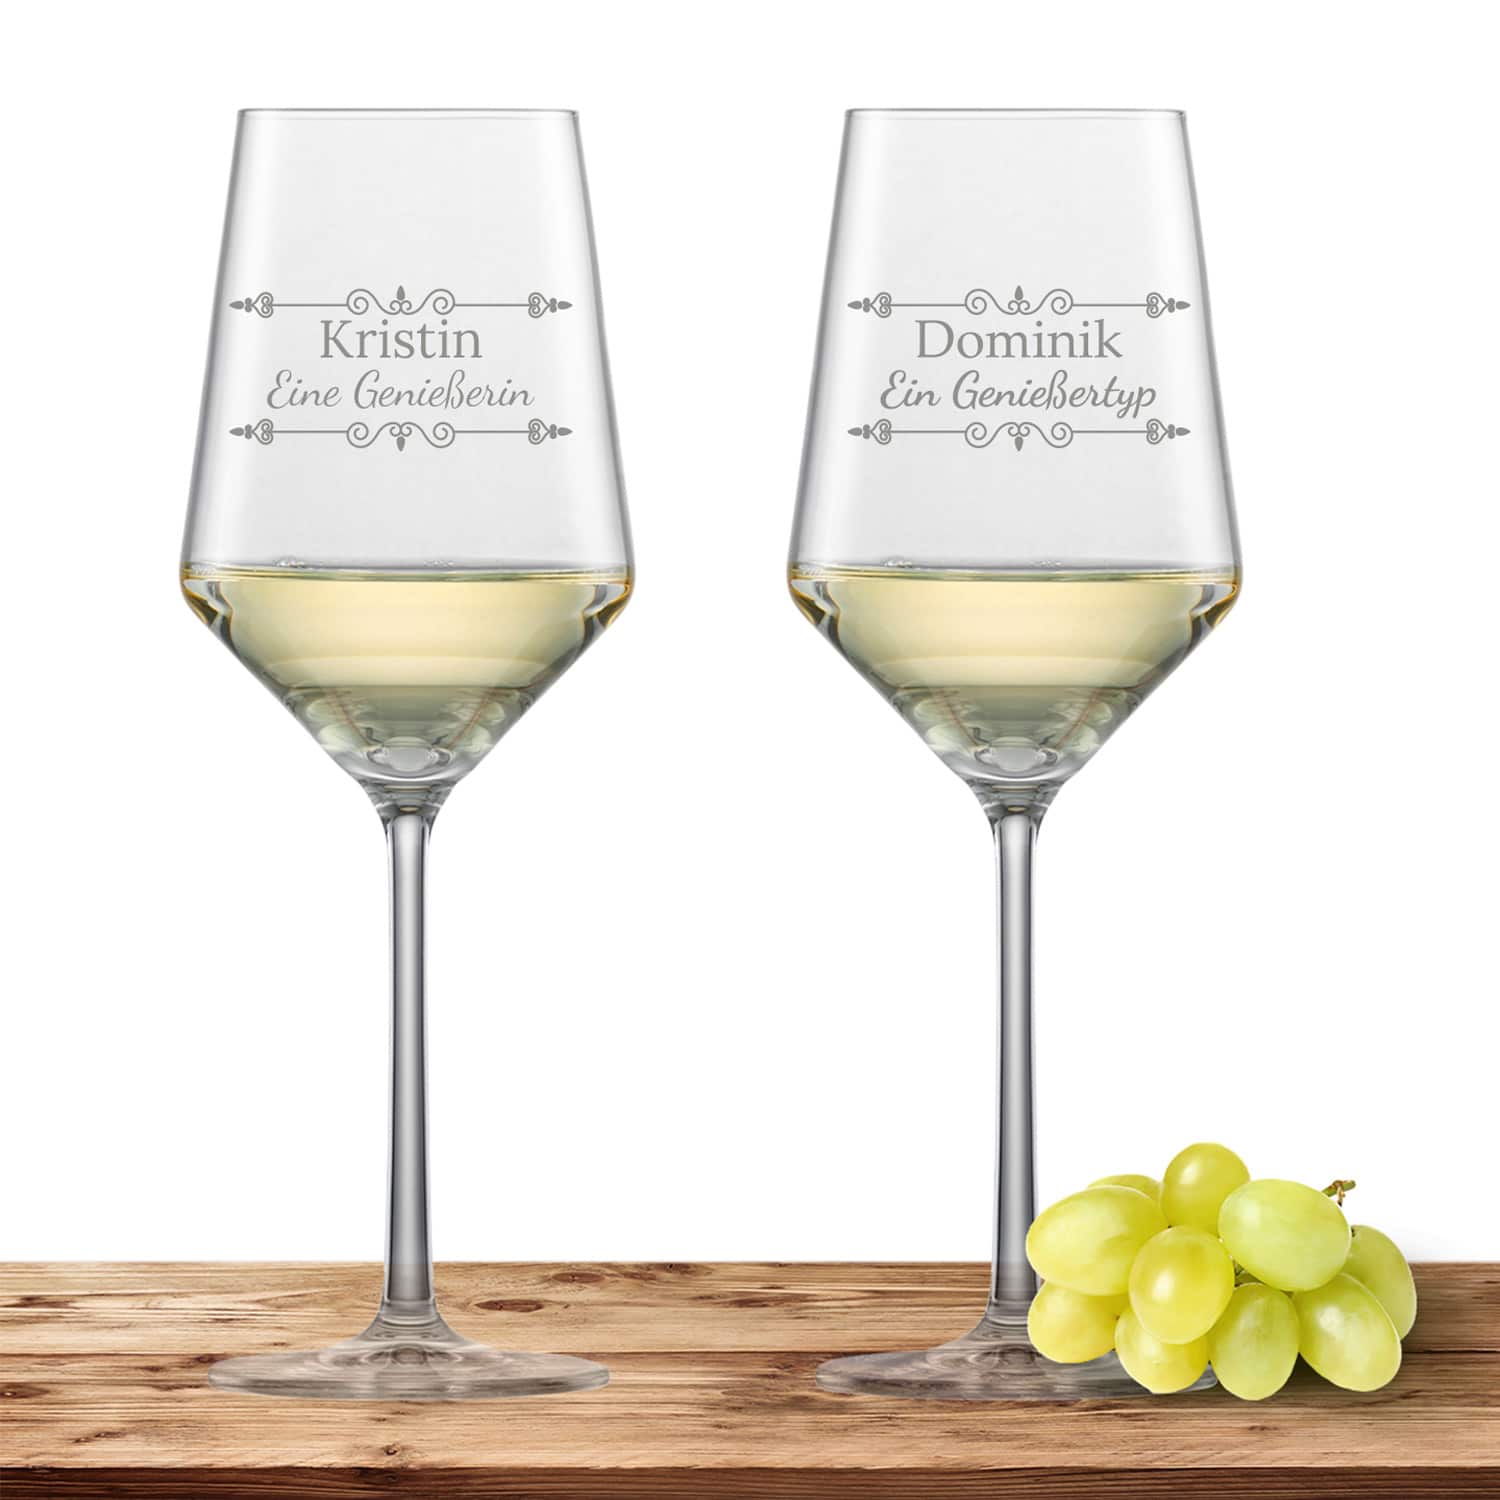 2x Schott Zwiesel Sauvignon Weißweinglas PURE mit Namen oder Wunschtext graviert (Verzierung 01)